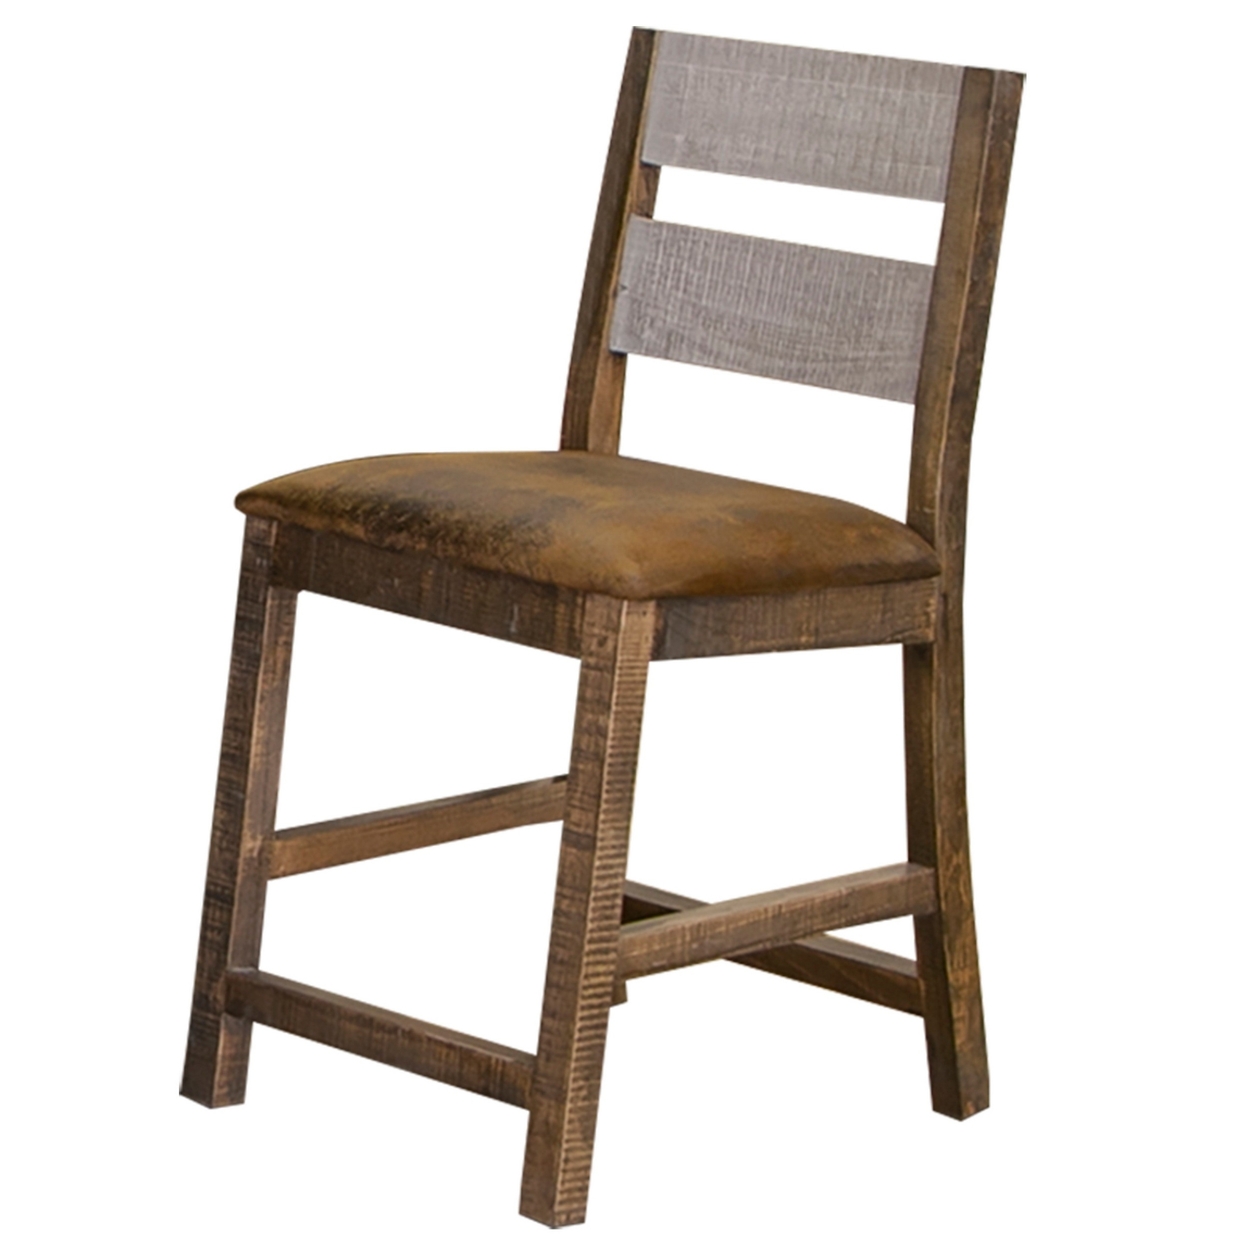 Pino 25 Inch Counter Height Chair, Set Of 2, Panel Back, Gray And Brown- Saltoro Sherpi